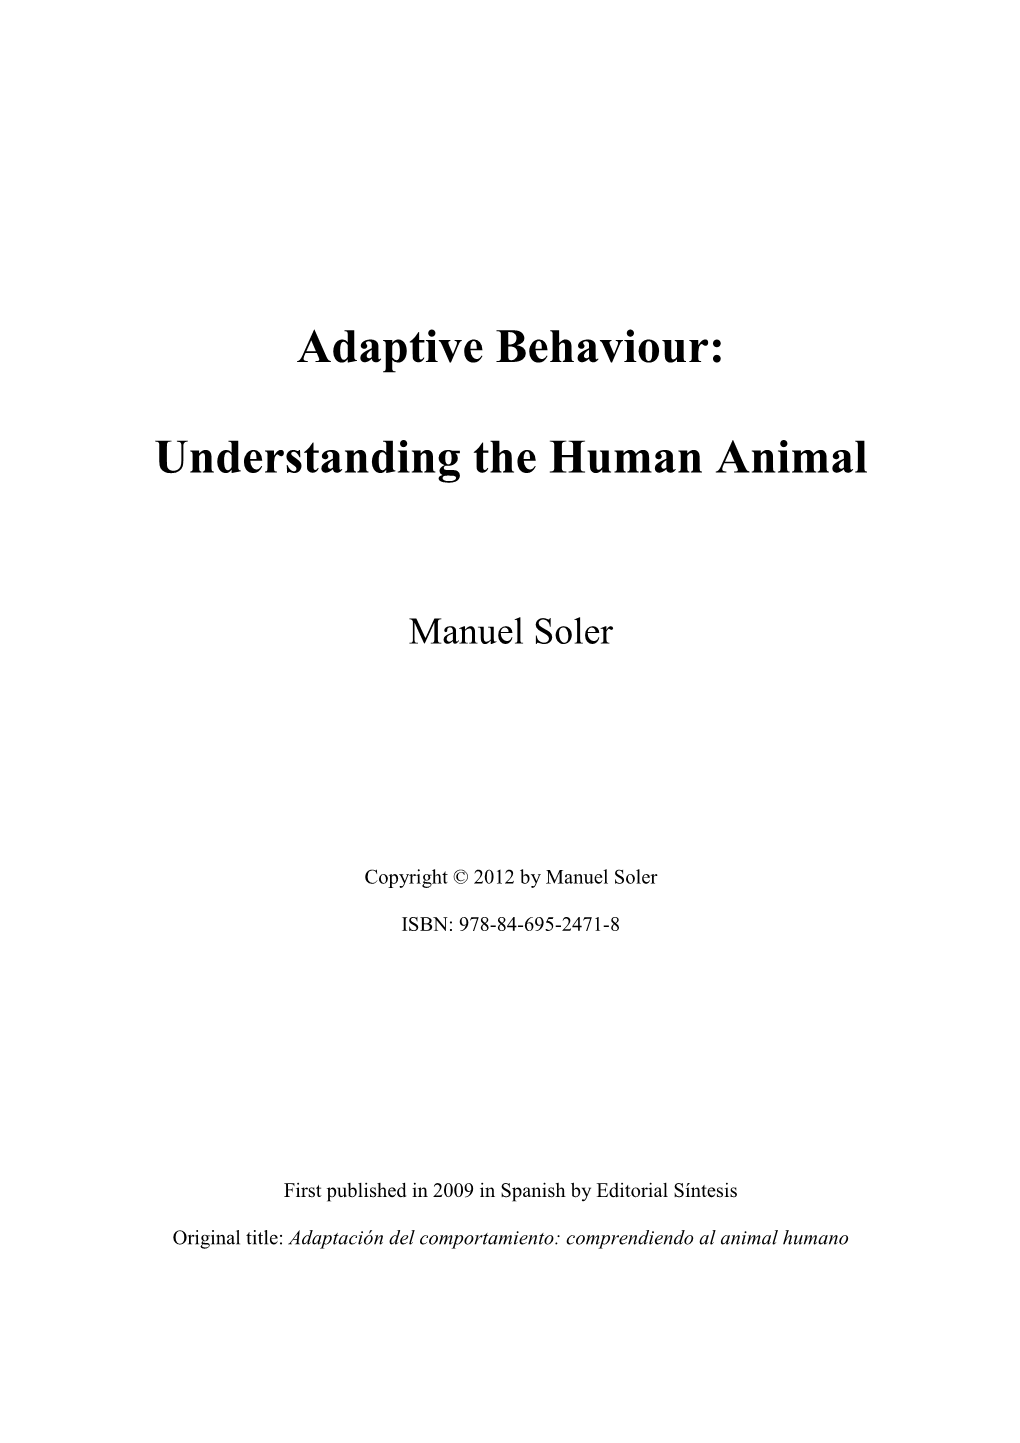 Adaptive Behaviour: Understanding the Human Animal